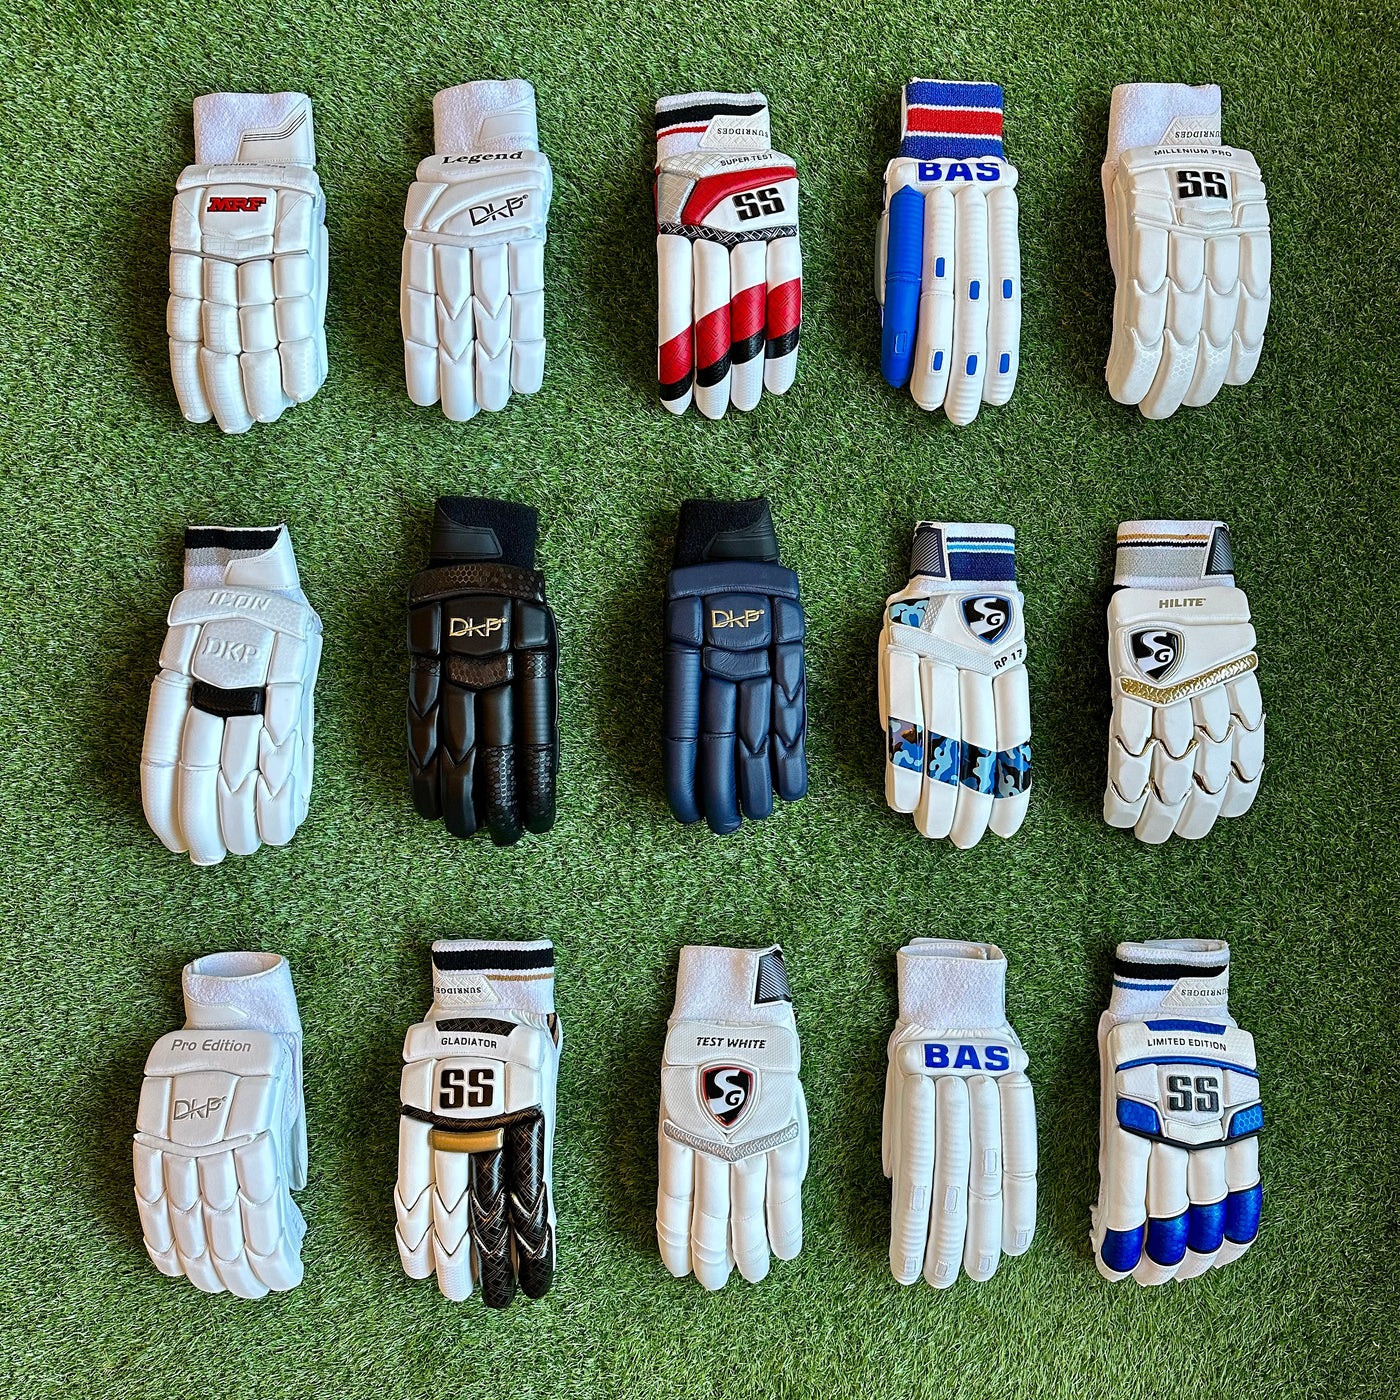 Buy Cricket Batting Gloves | Cricket Gloves Sale | BAS Cricket Gloves | SS TON Gloves | SG Gloves Gloves |  CA Cricket Gloves | DKP Cricket Gloves | DKP Cricket Equipment Sale